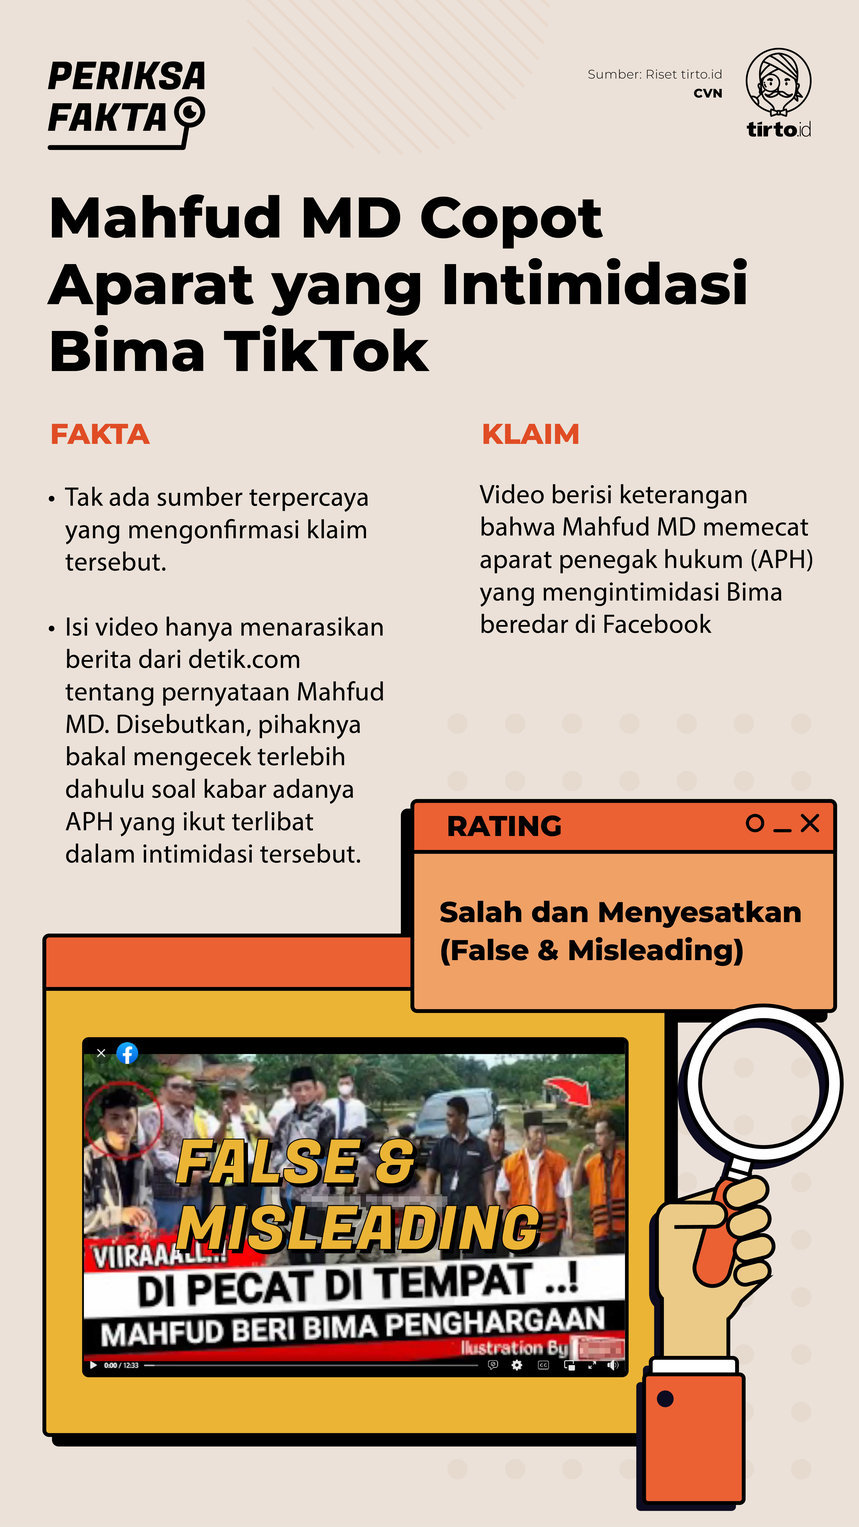 Infografik Periksa Fakta Mahfud MD Copot Aparat